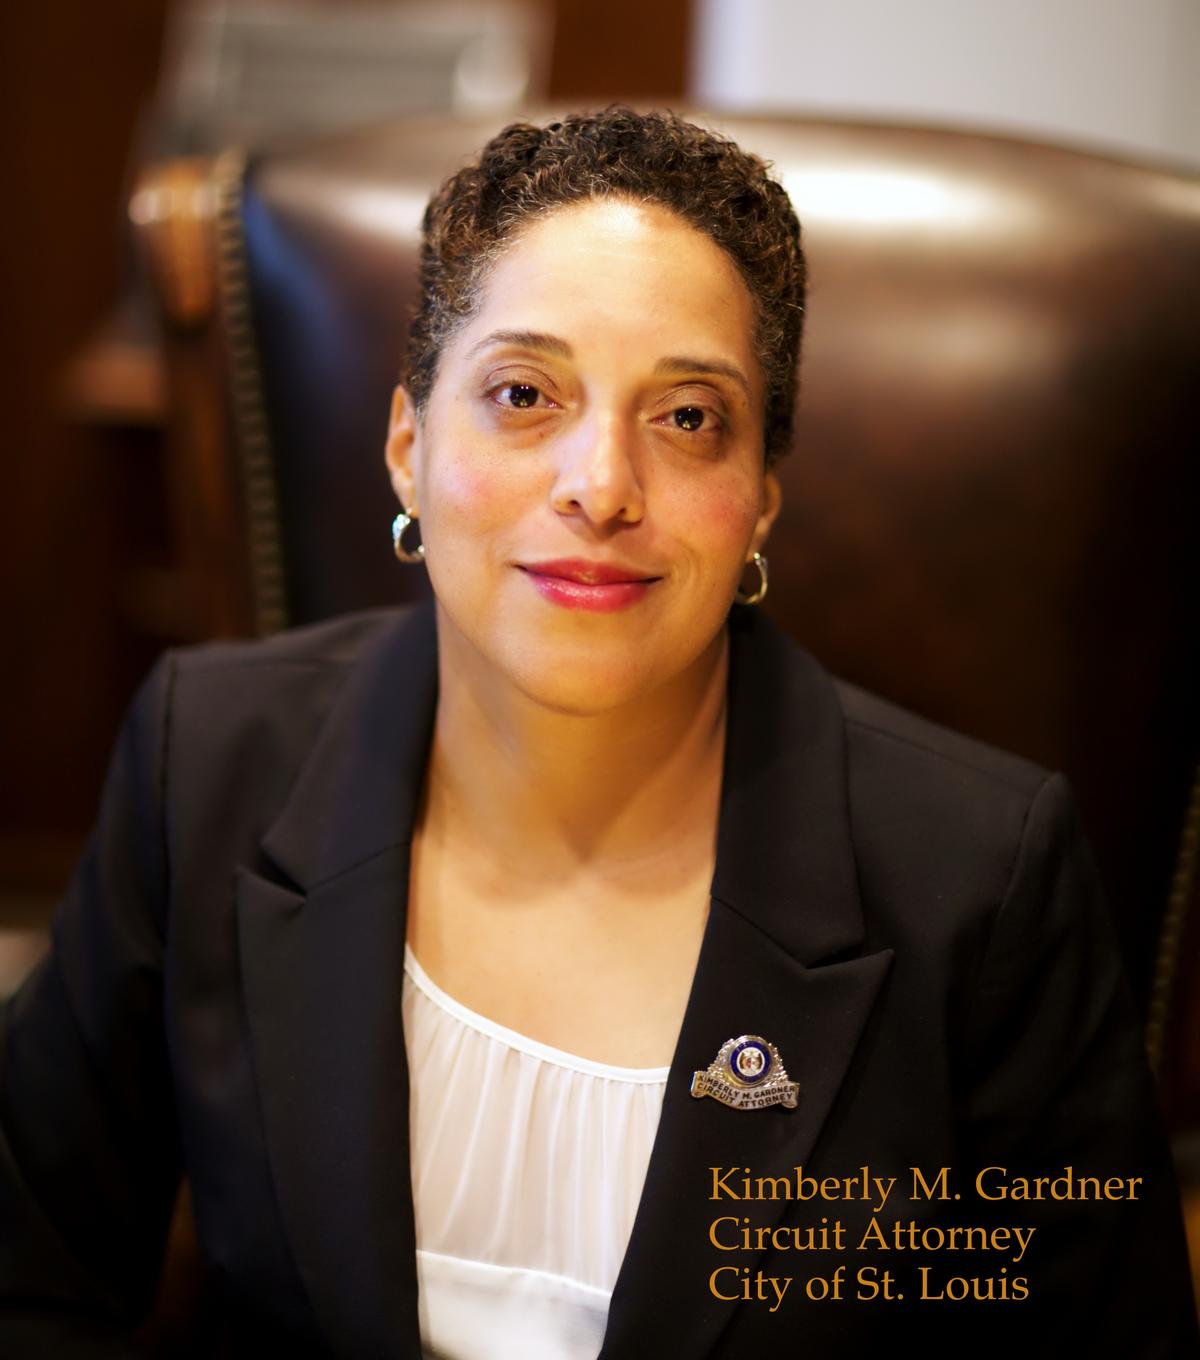 St. Louis Circuit Attorney Kim Gardner (circuit attorney.org)